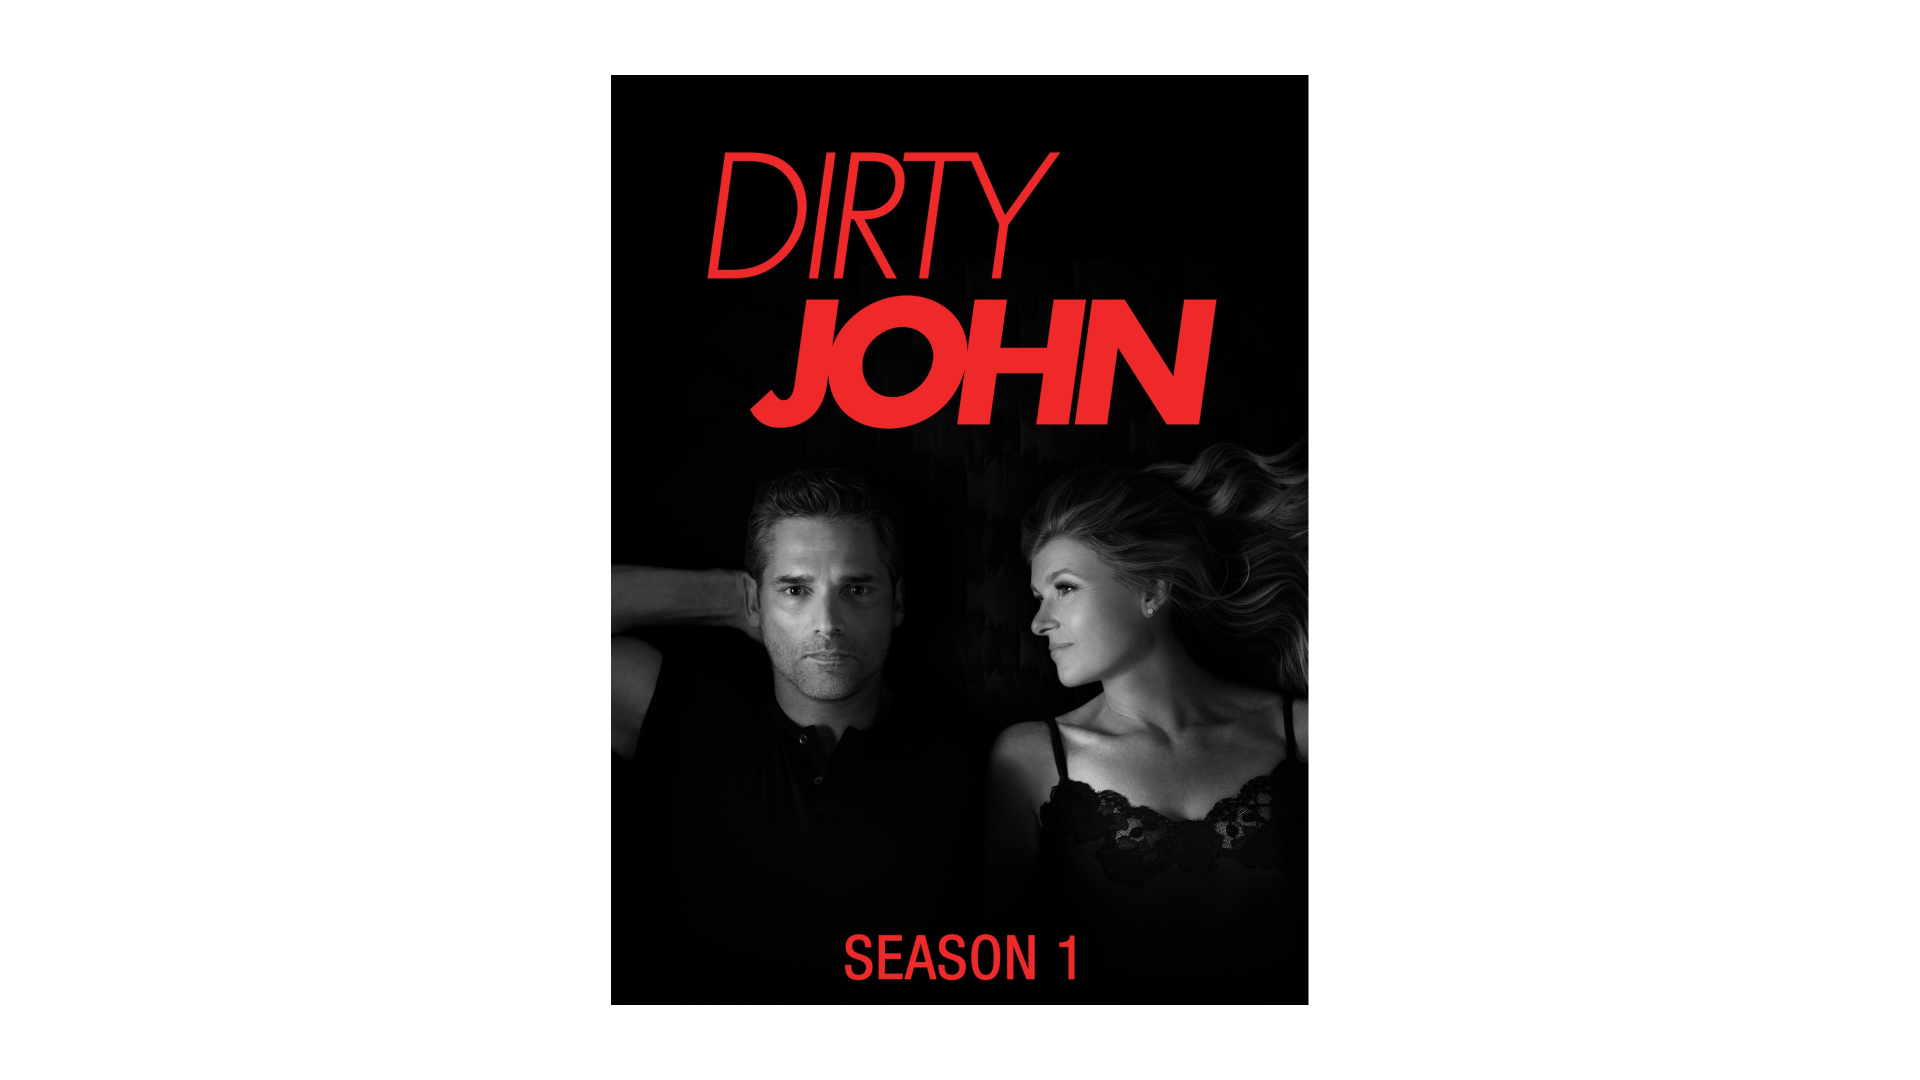 “Dirty John” Poster